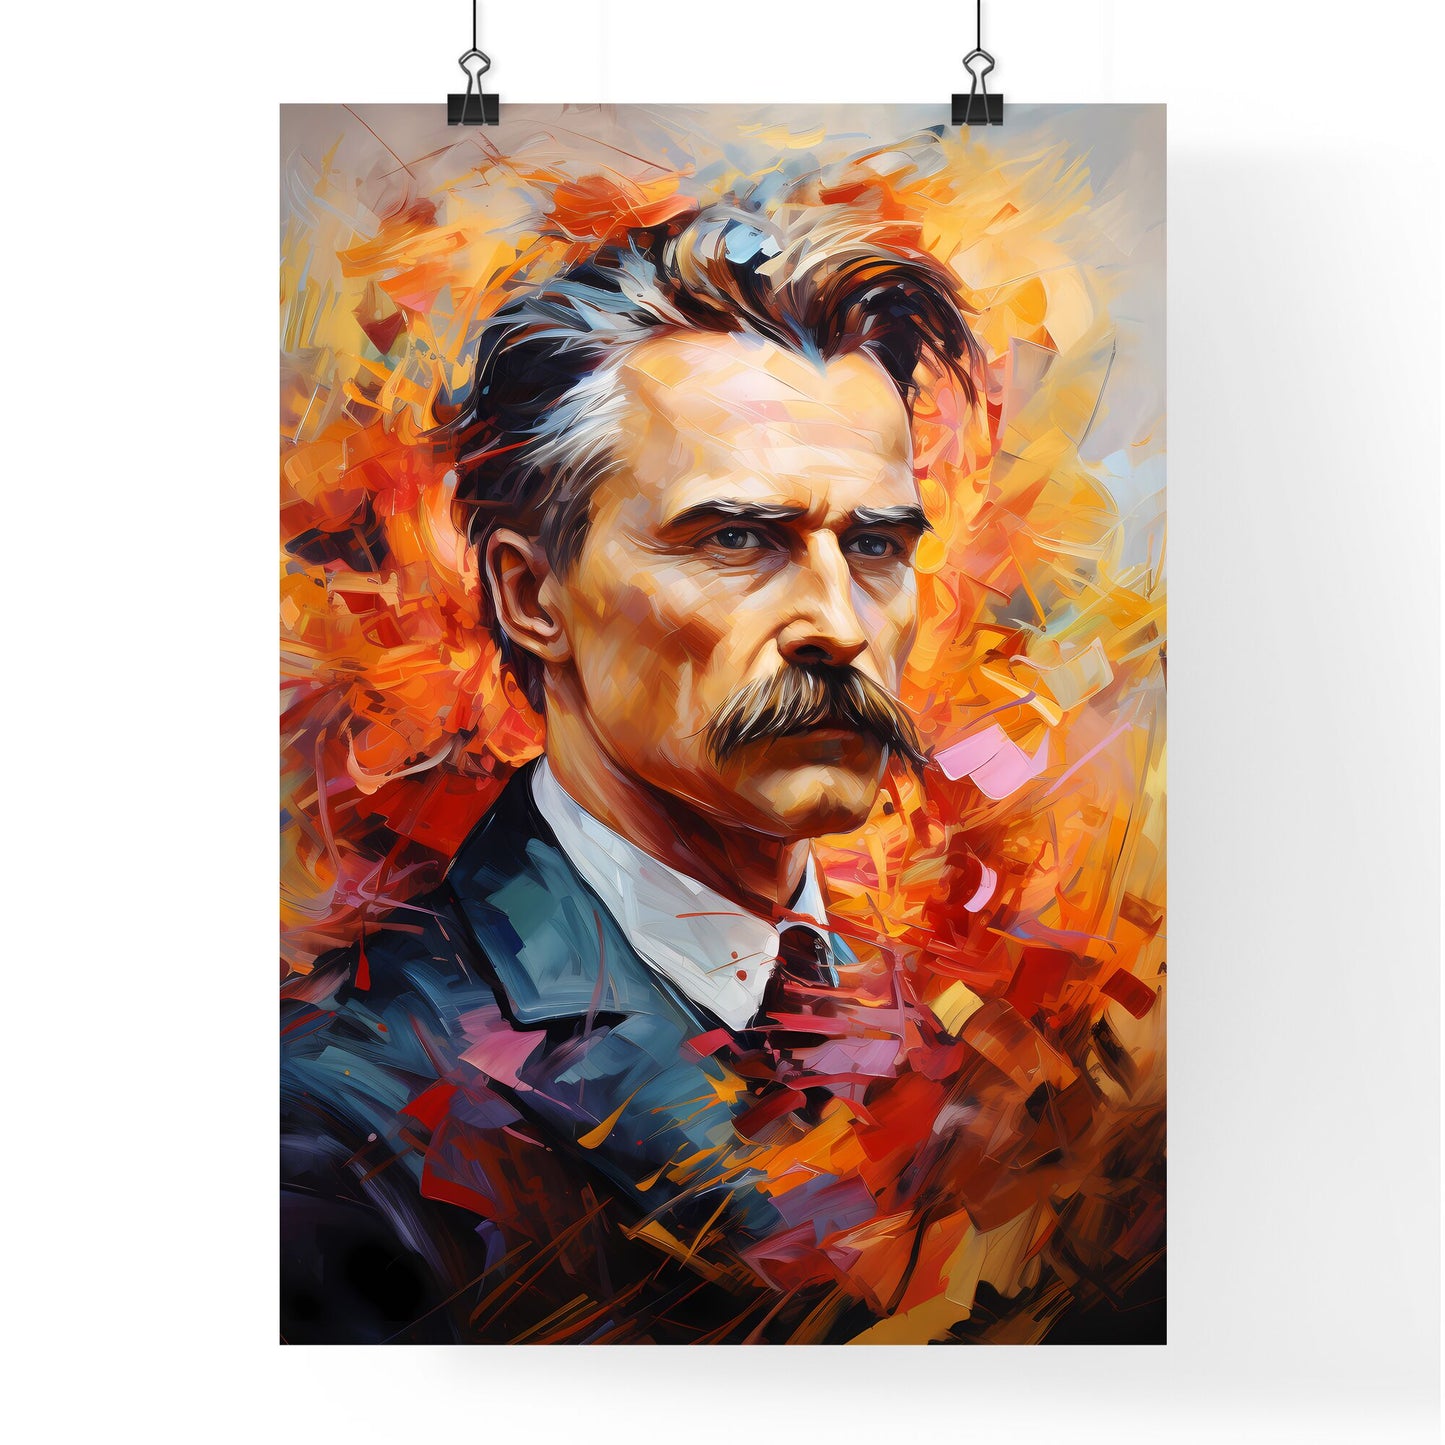 Friedrich Wilhelm Nietzsche German Philosopher - A Painting Of A Man With A Mustache Default Title